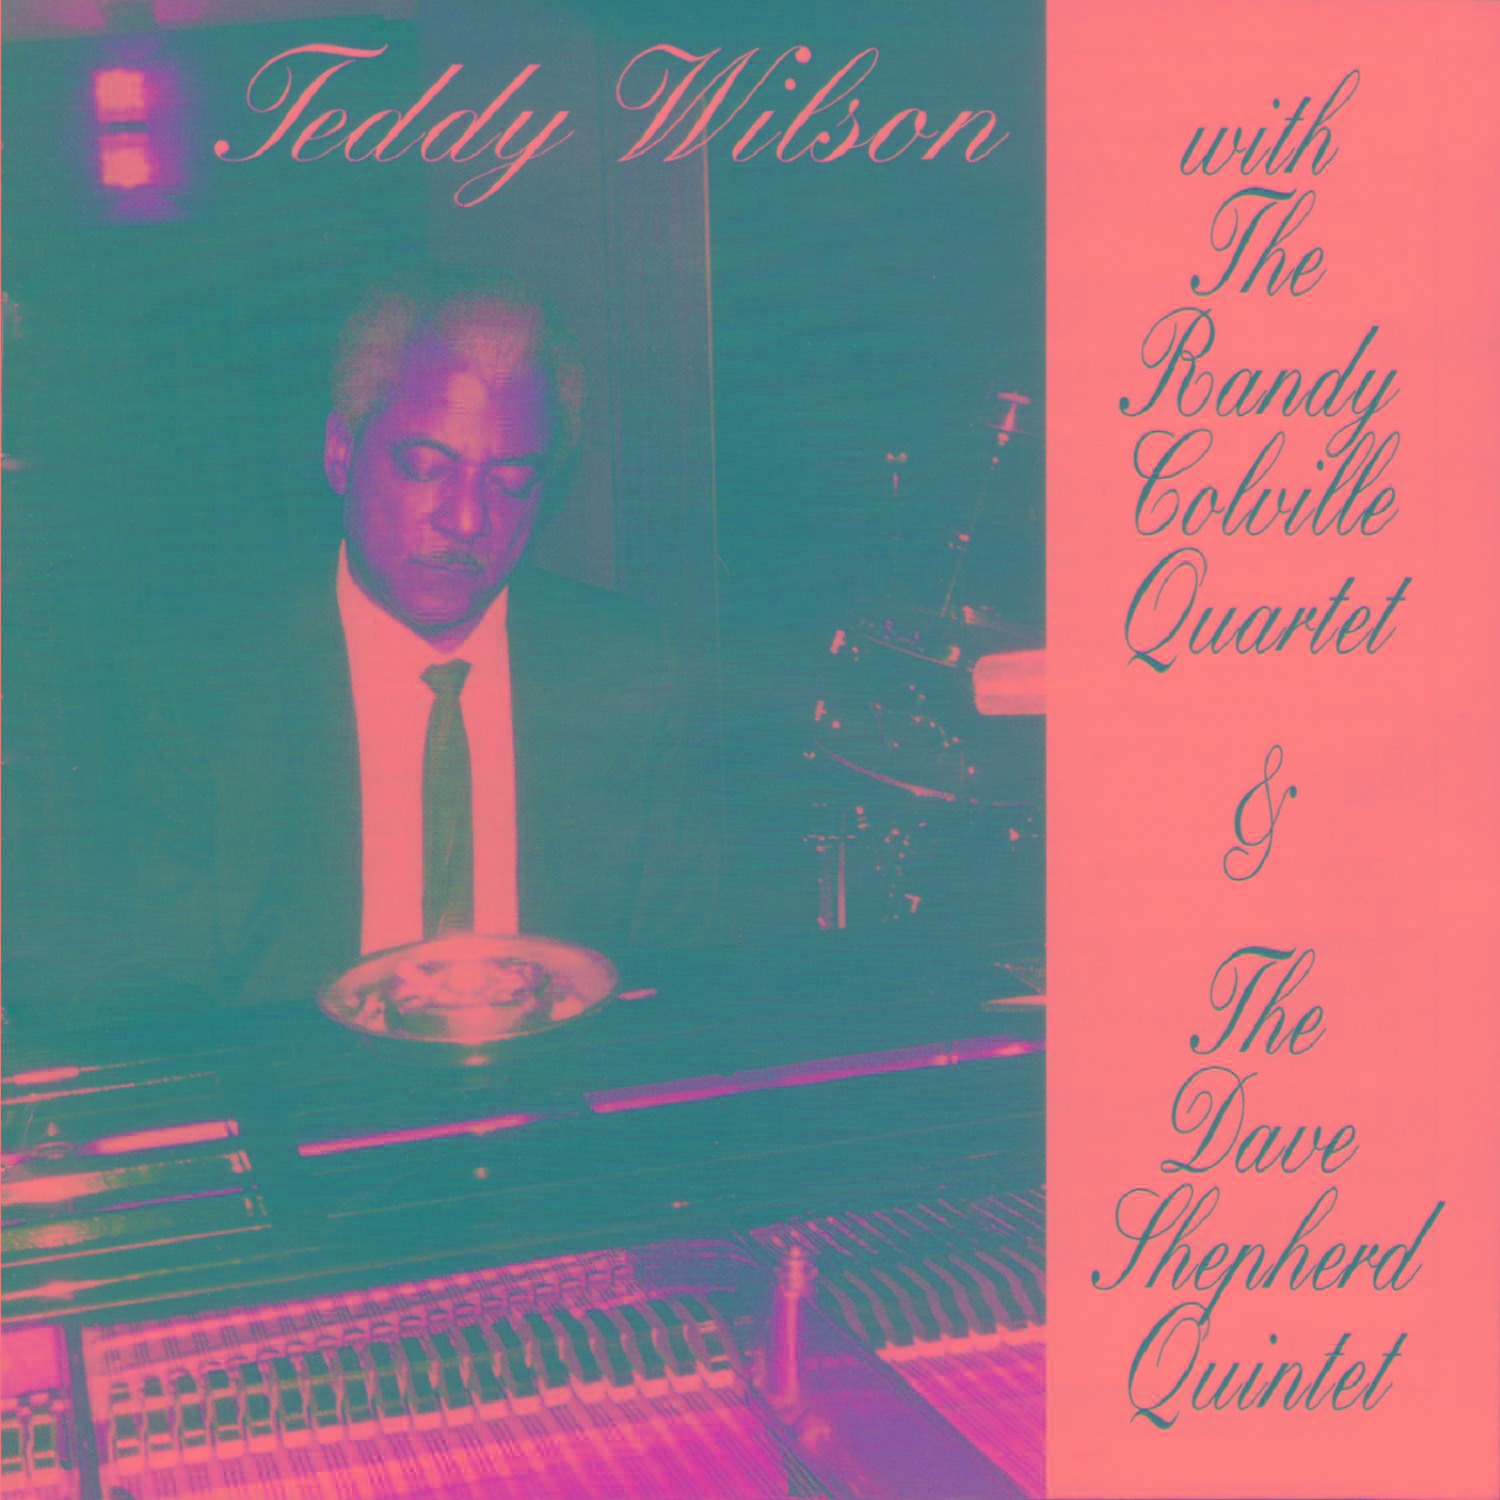 Teddy Wilson with the Randy Colville Quartet & The Dave Shepherd Quintet